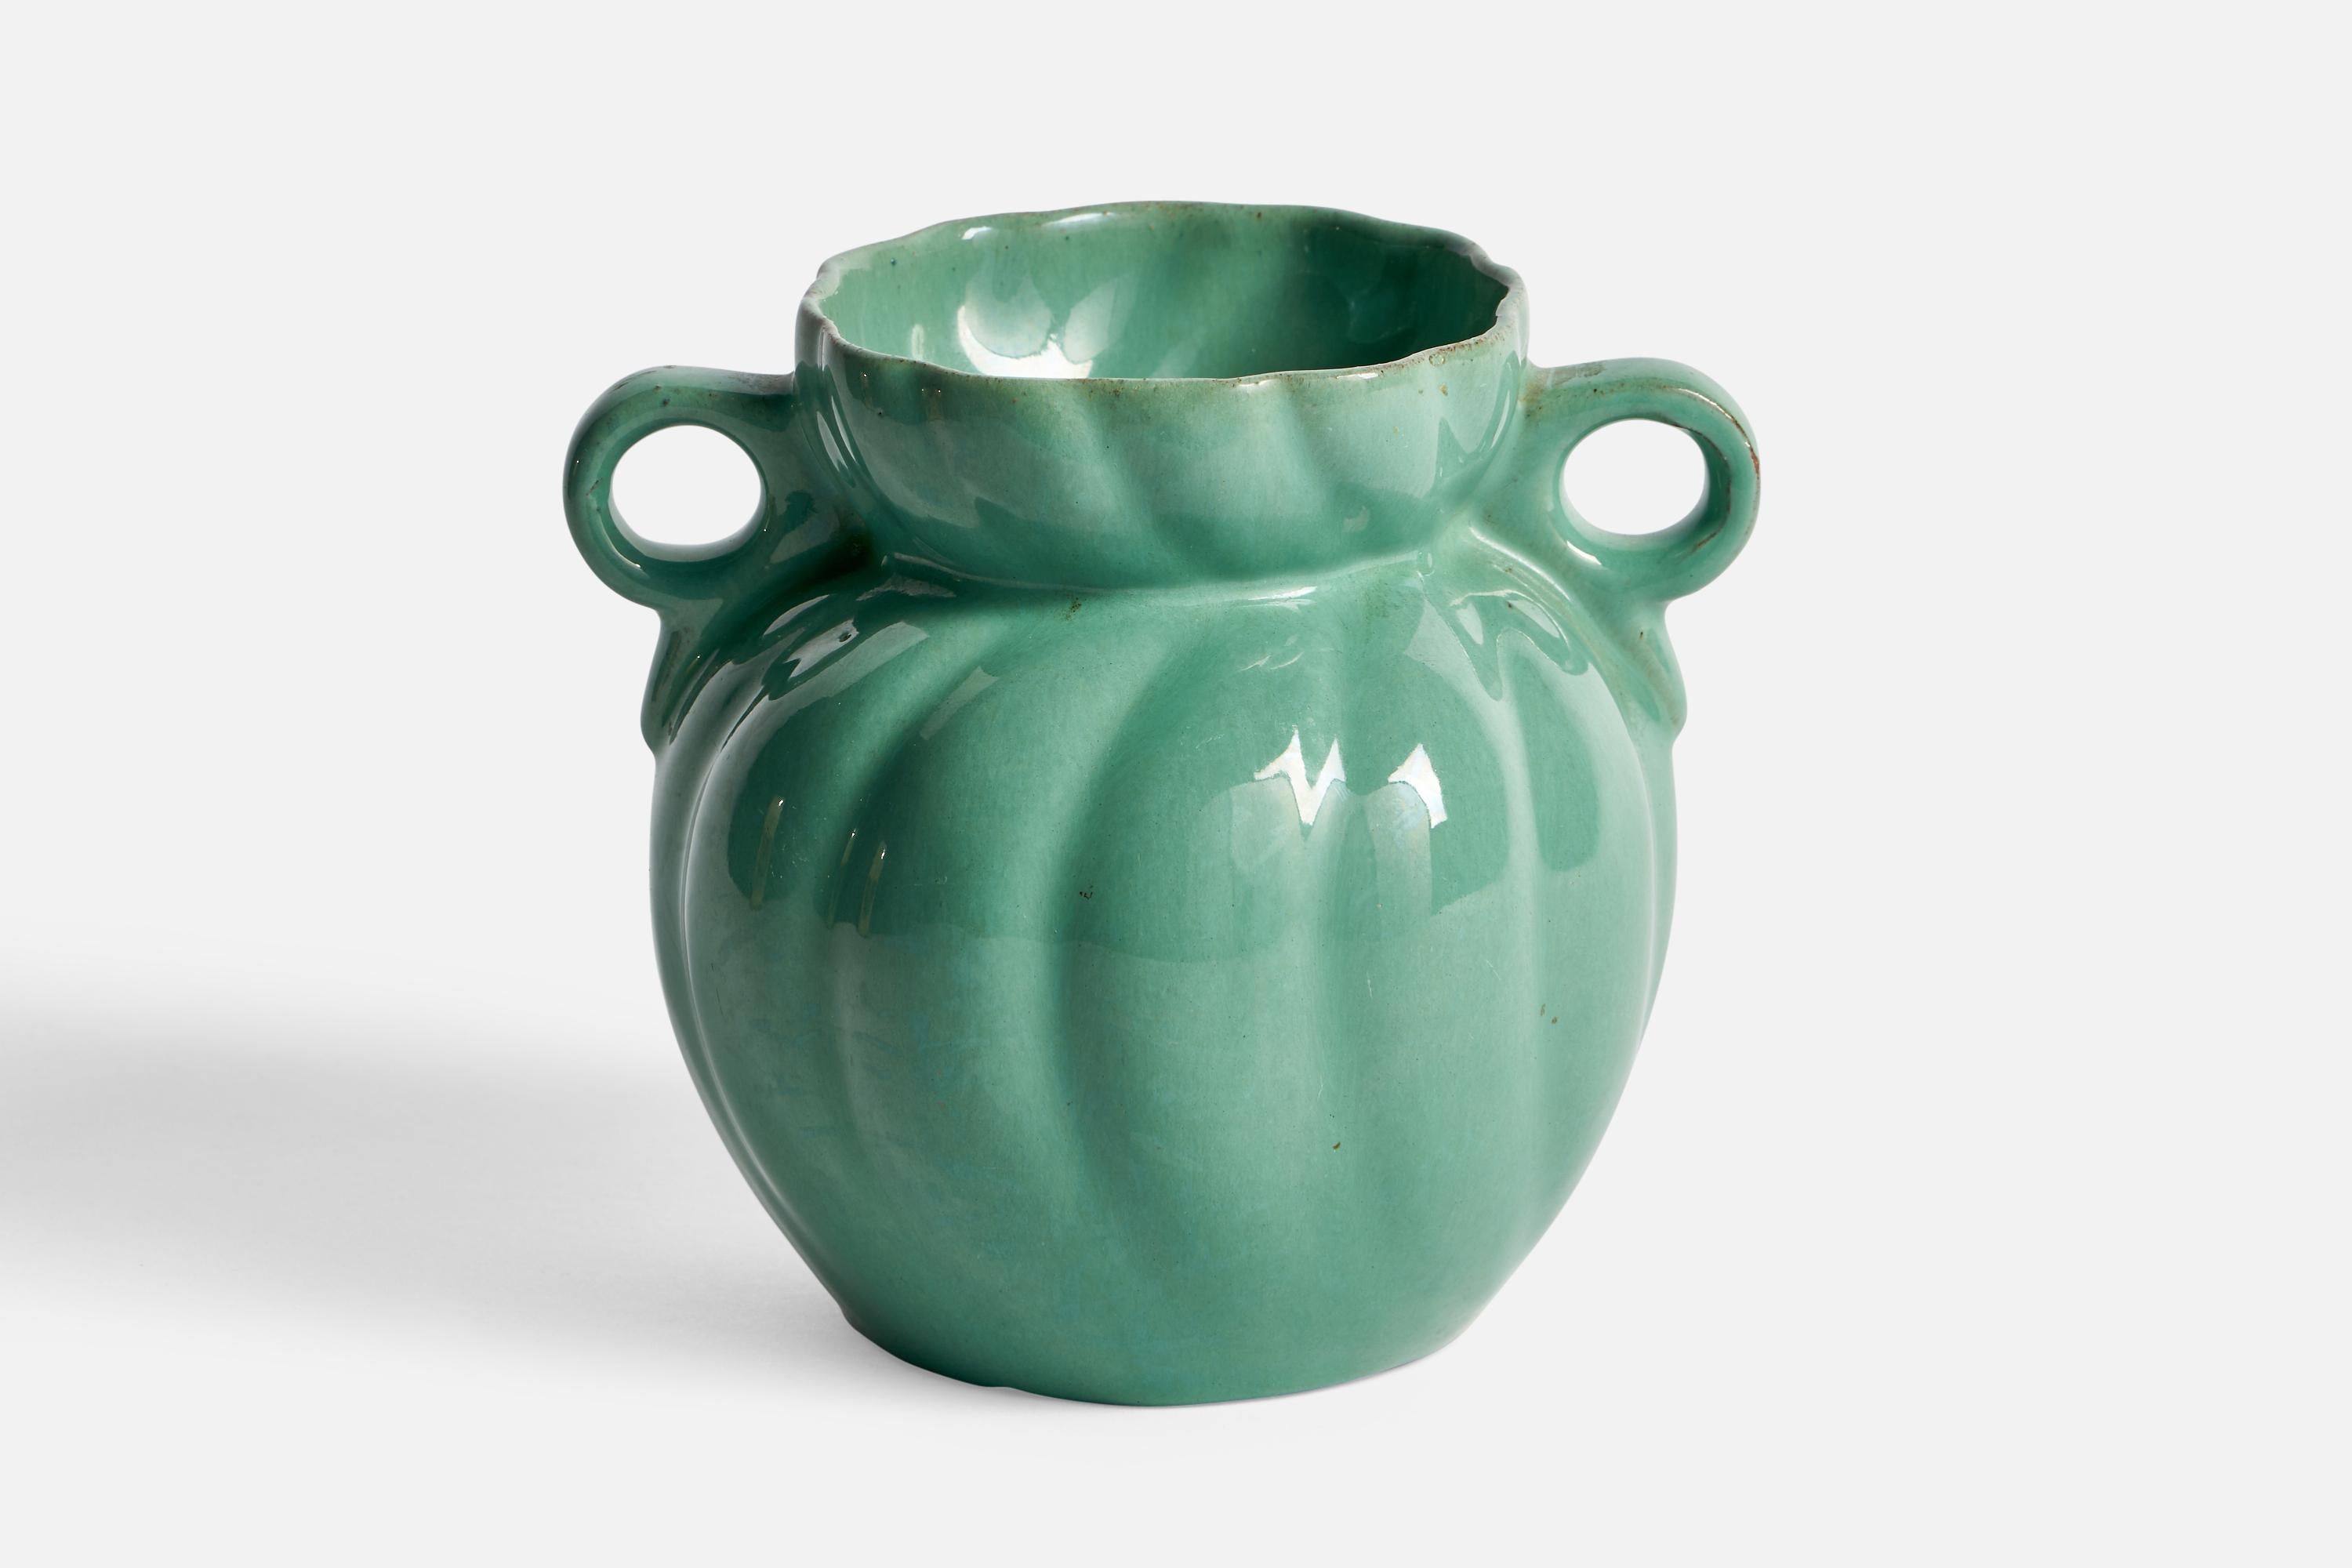 A green-glazed earthenware vase designed and produced in Sweden, 1930s.